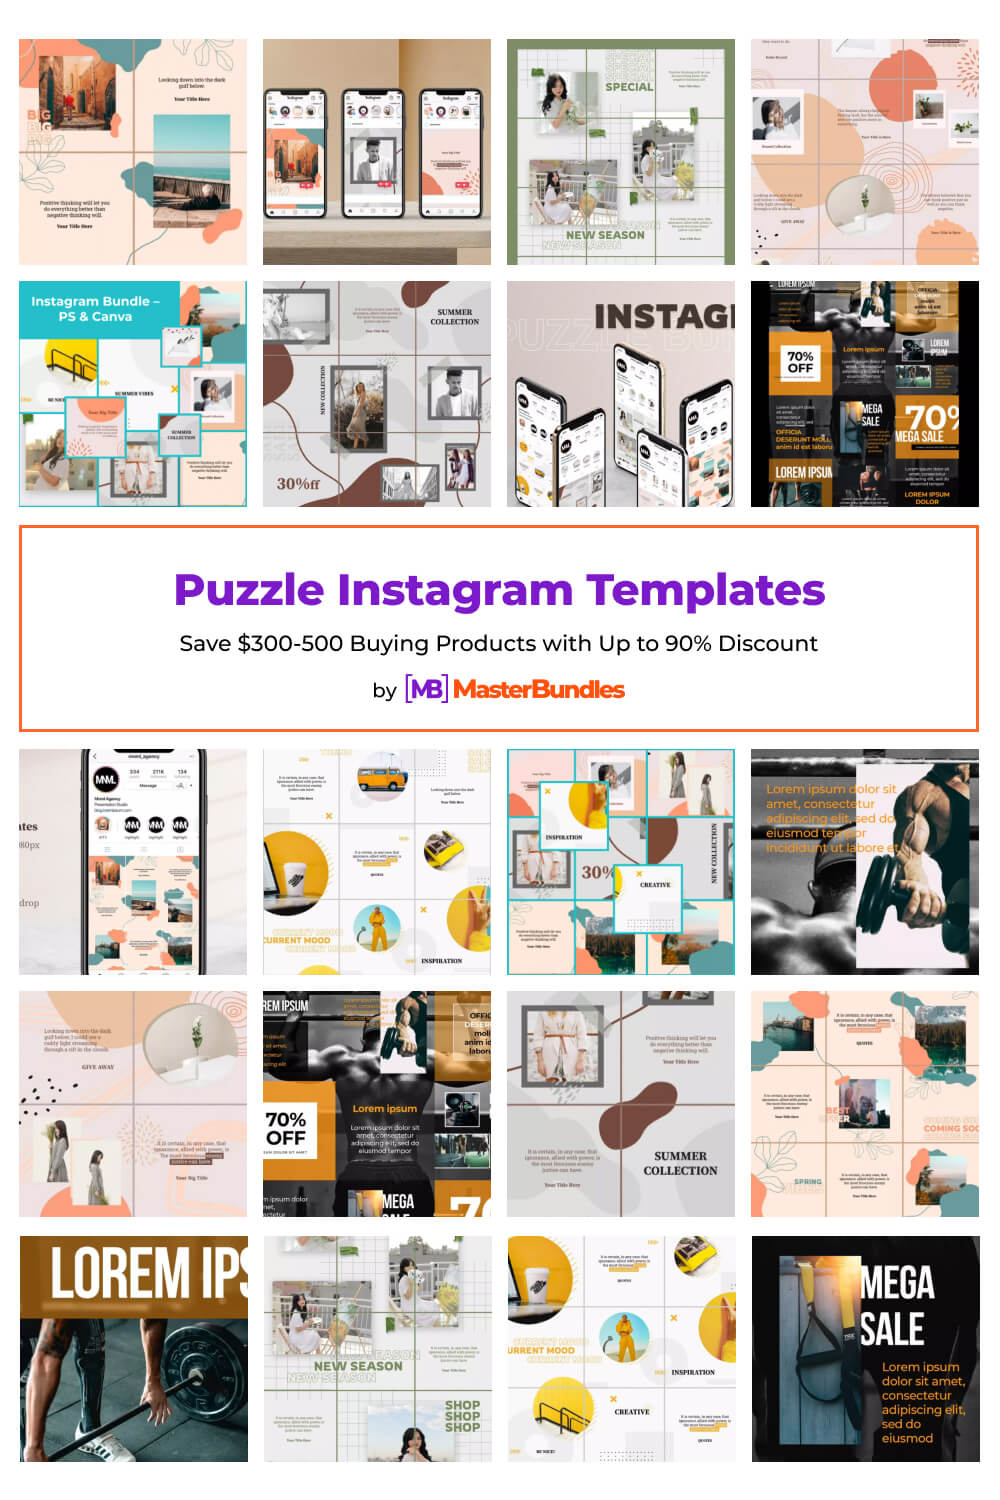 puzzle instagram templates pinterest image.